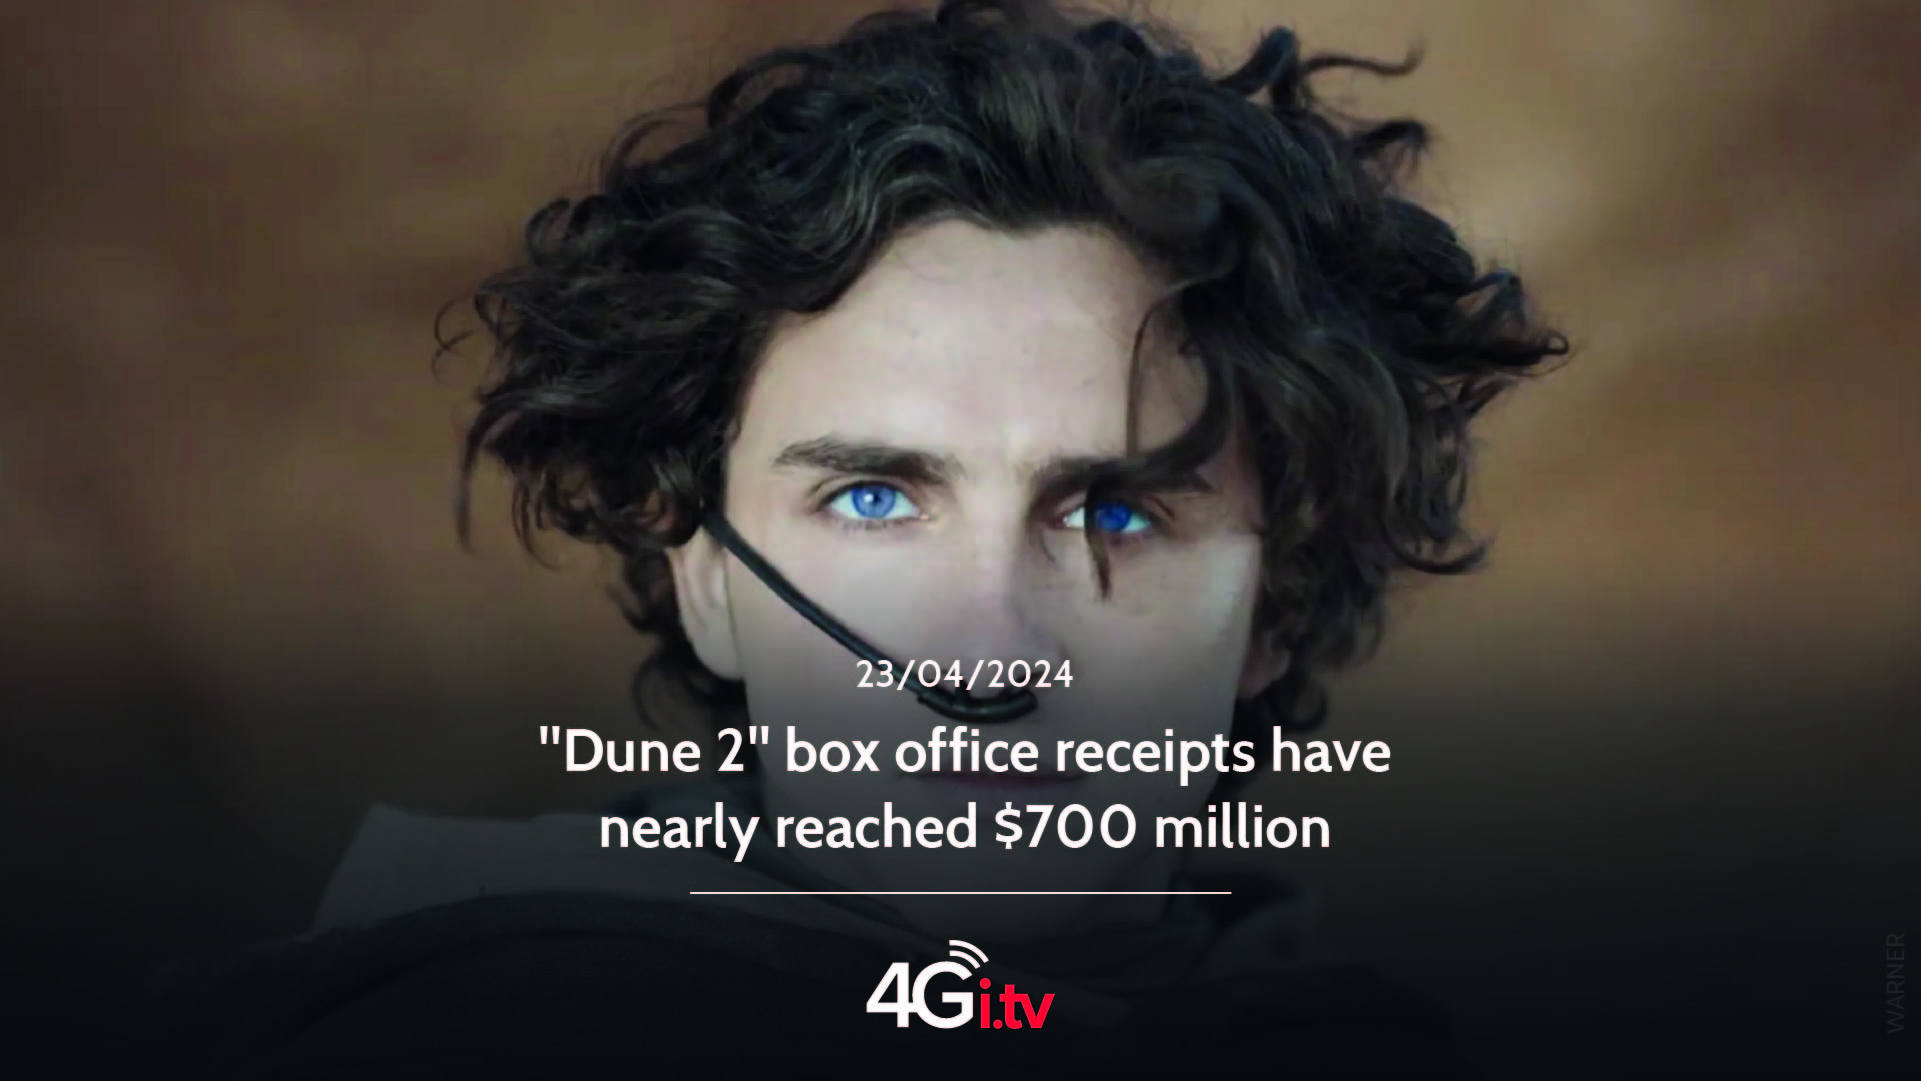 Подробнее о статье “Dune 2” box office receipts have nearly reached $700 million